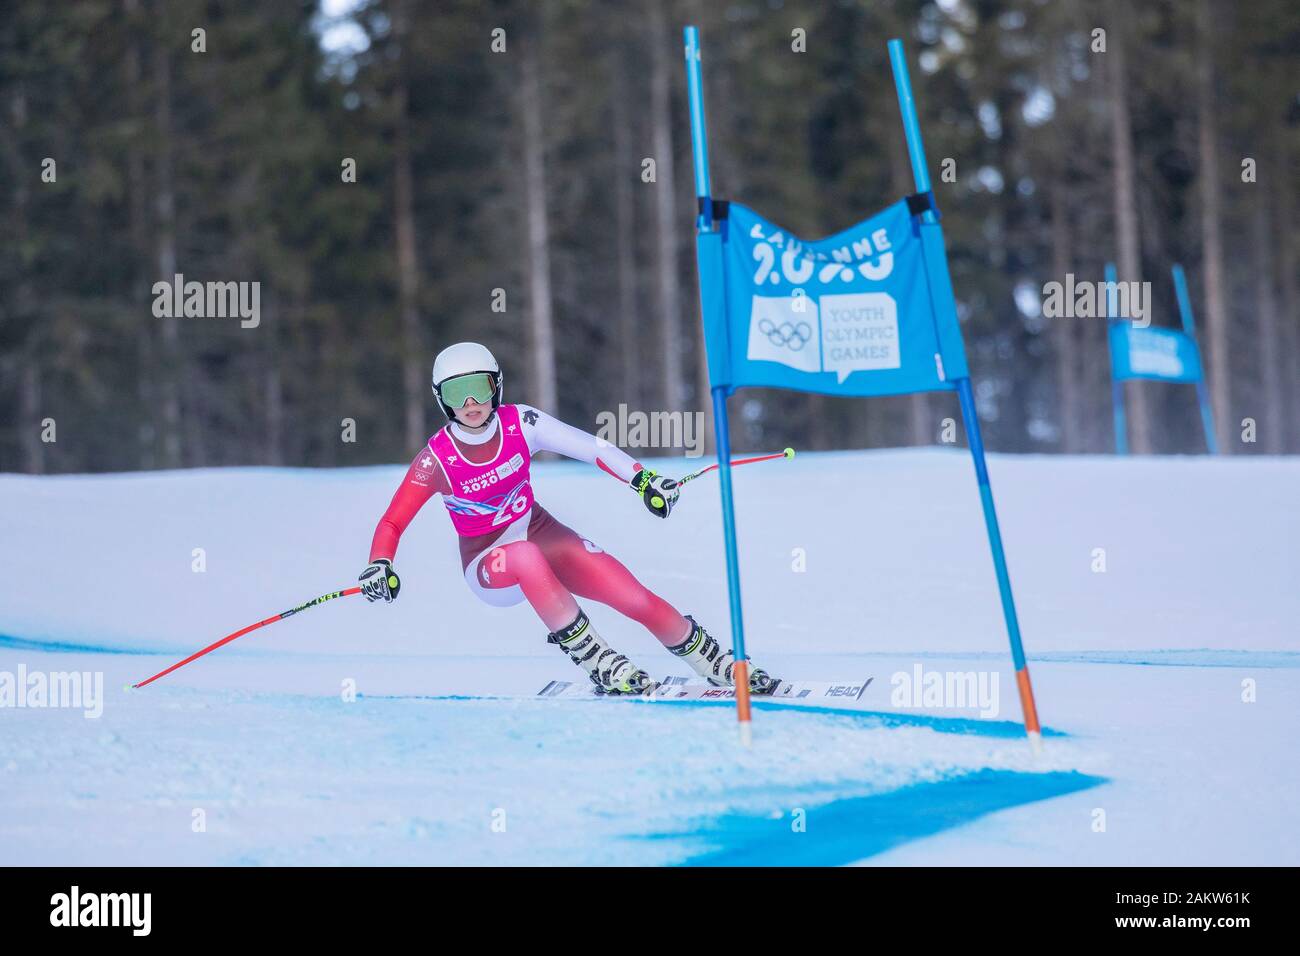 Sciatore alpino, Amelie Klopfenstein, SUI, compete in Lausanne 2020 Donna Super G Sci di discesa a Les Diablerets Alpine Center in Svizzera Foto Stock